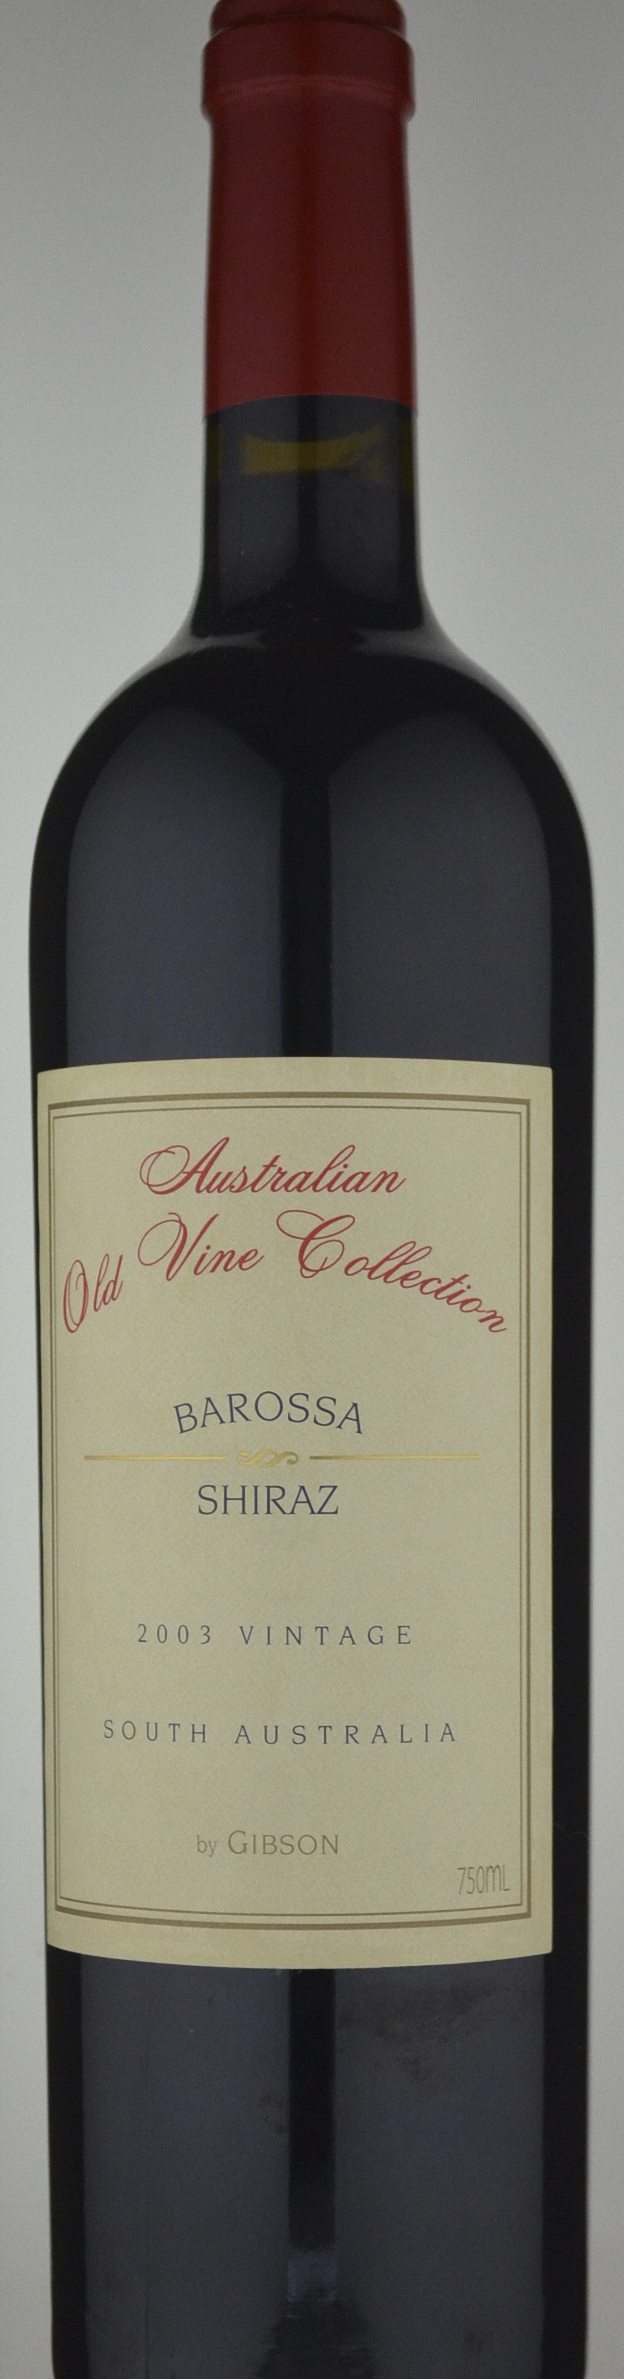 Gibson Wines Australian Old Vine Collection Shiraz 2003